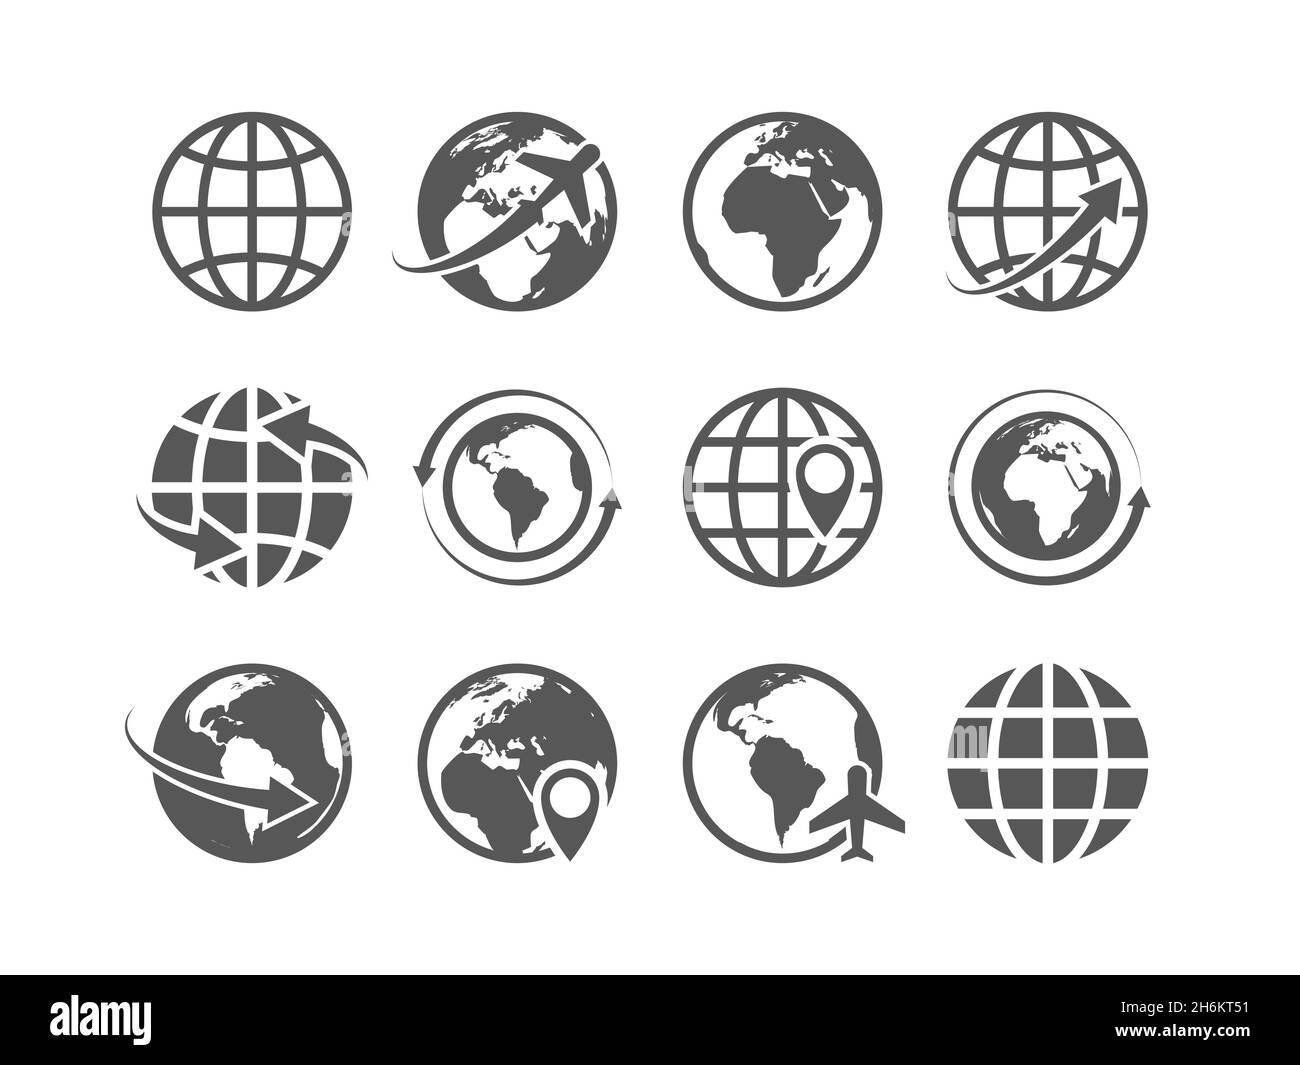 Globussymbole eingestellt. Welt Erde Globus Karte Internet globalen Handel Tourismus Vektor-Symbole Stock Vektor